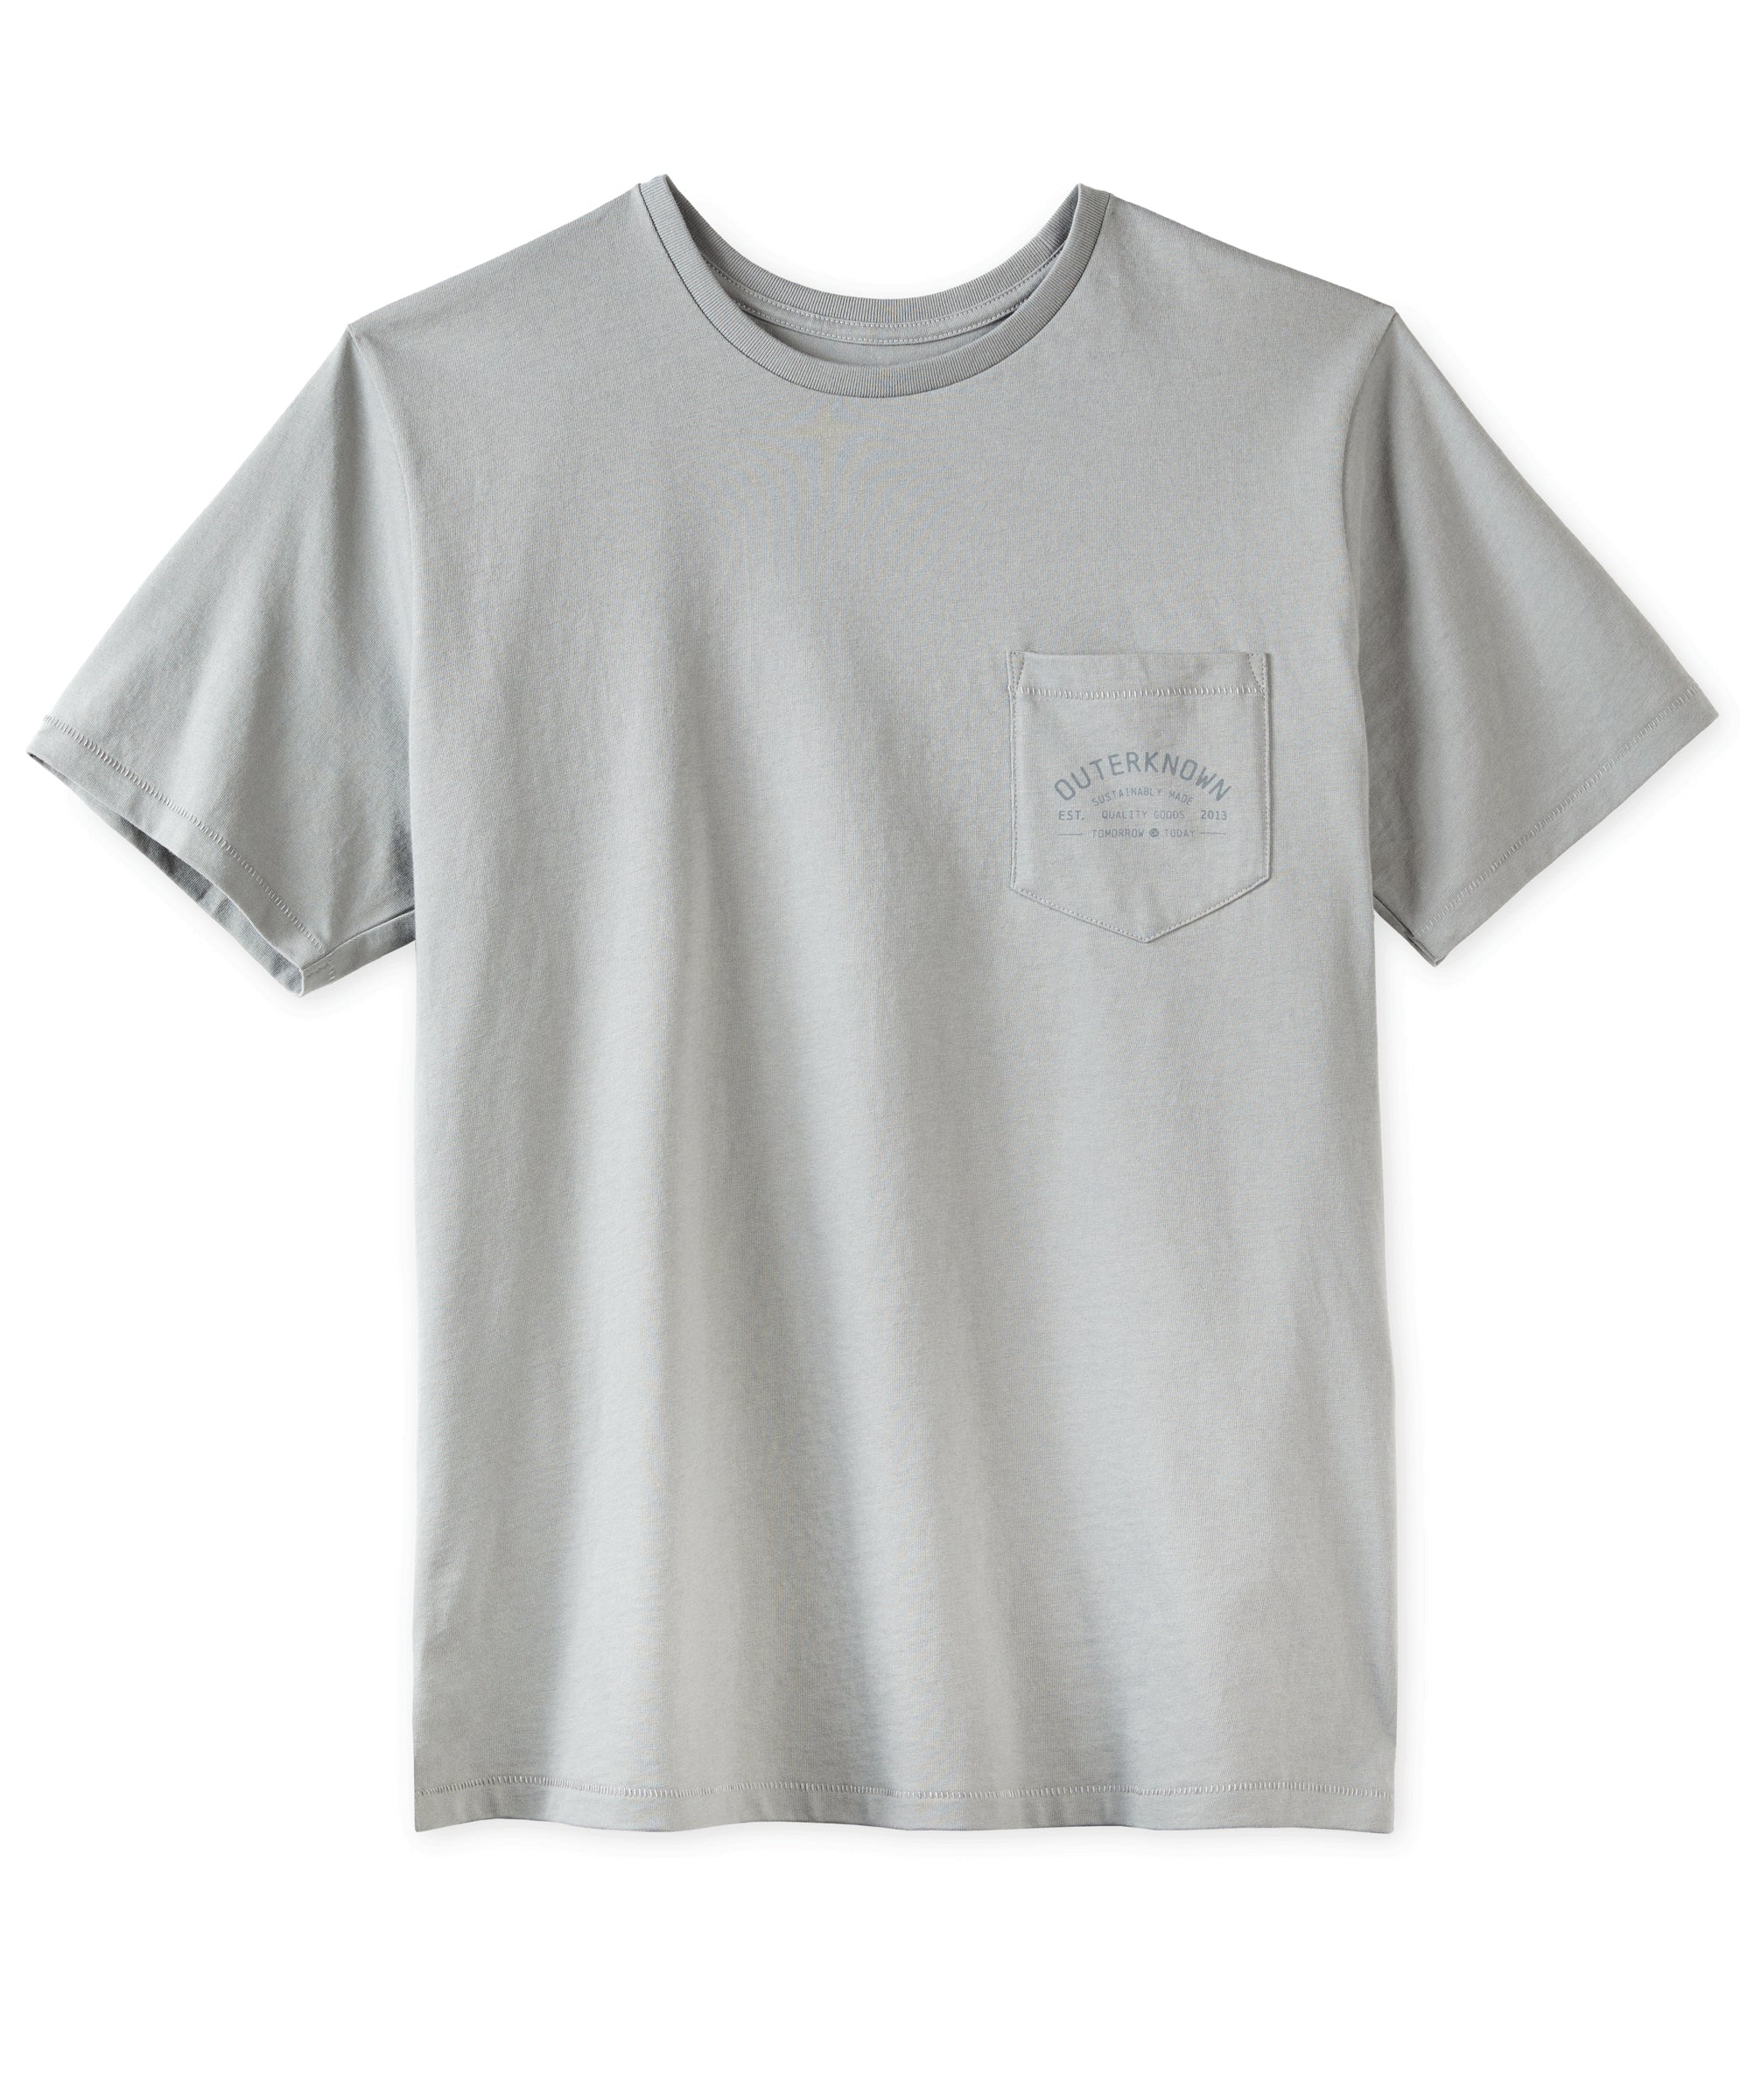 Tommy bahama T shirt Graphic Crew Neck Long Sleeve S, M, L XL, XXL